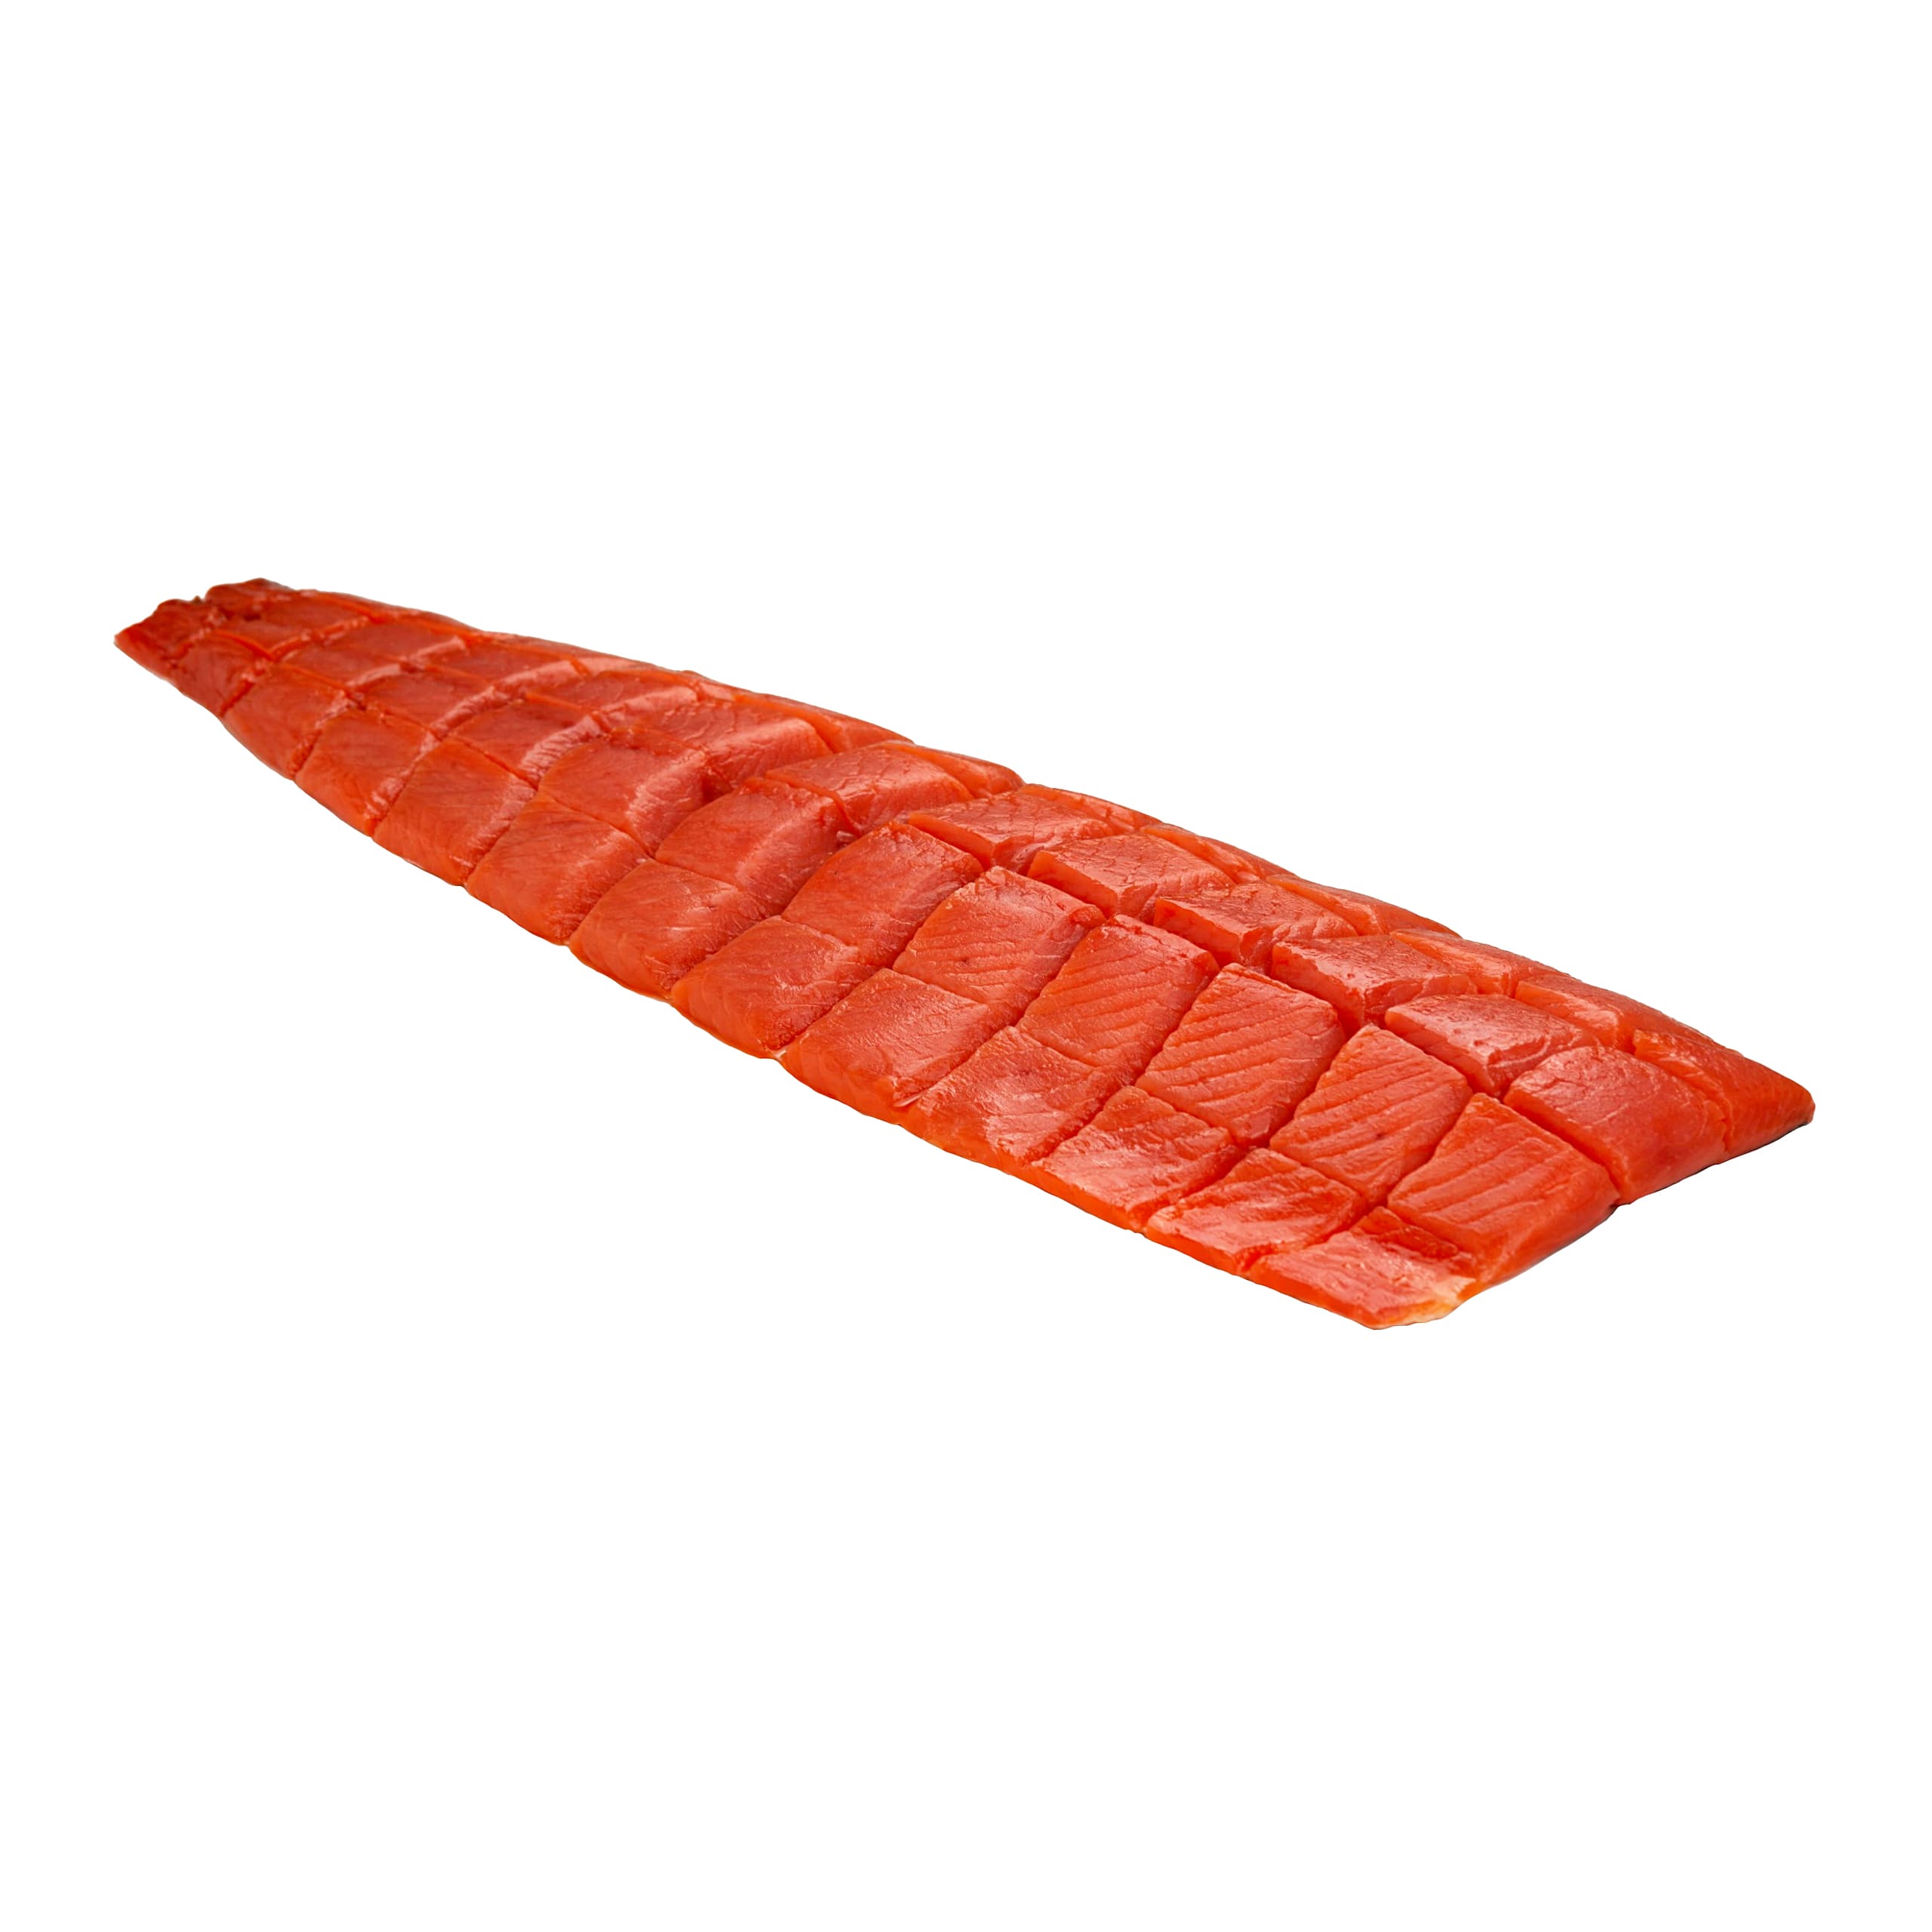 Dried Royal Salmon Yukola